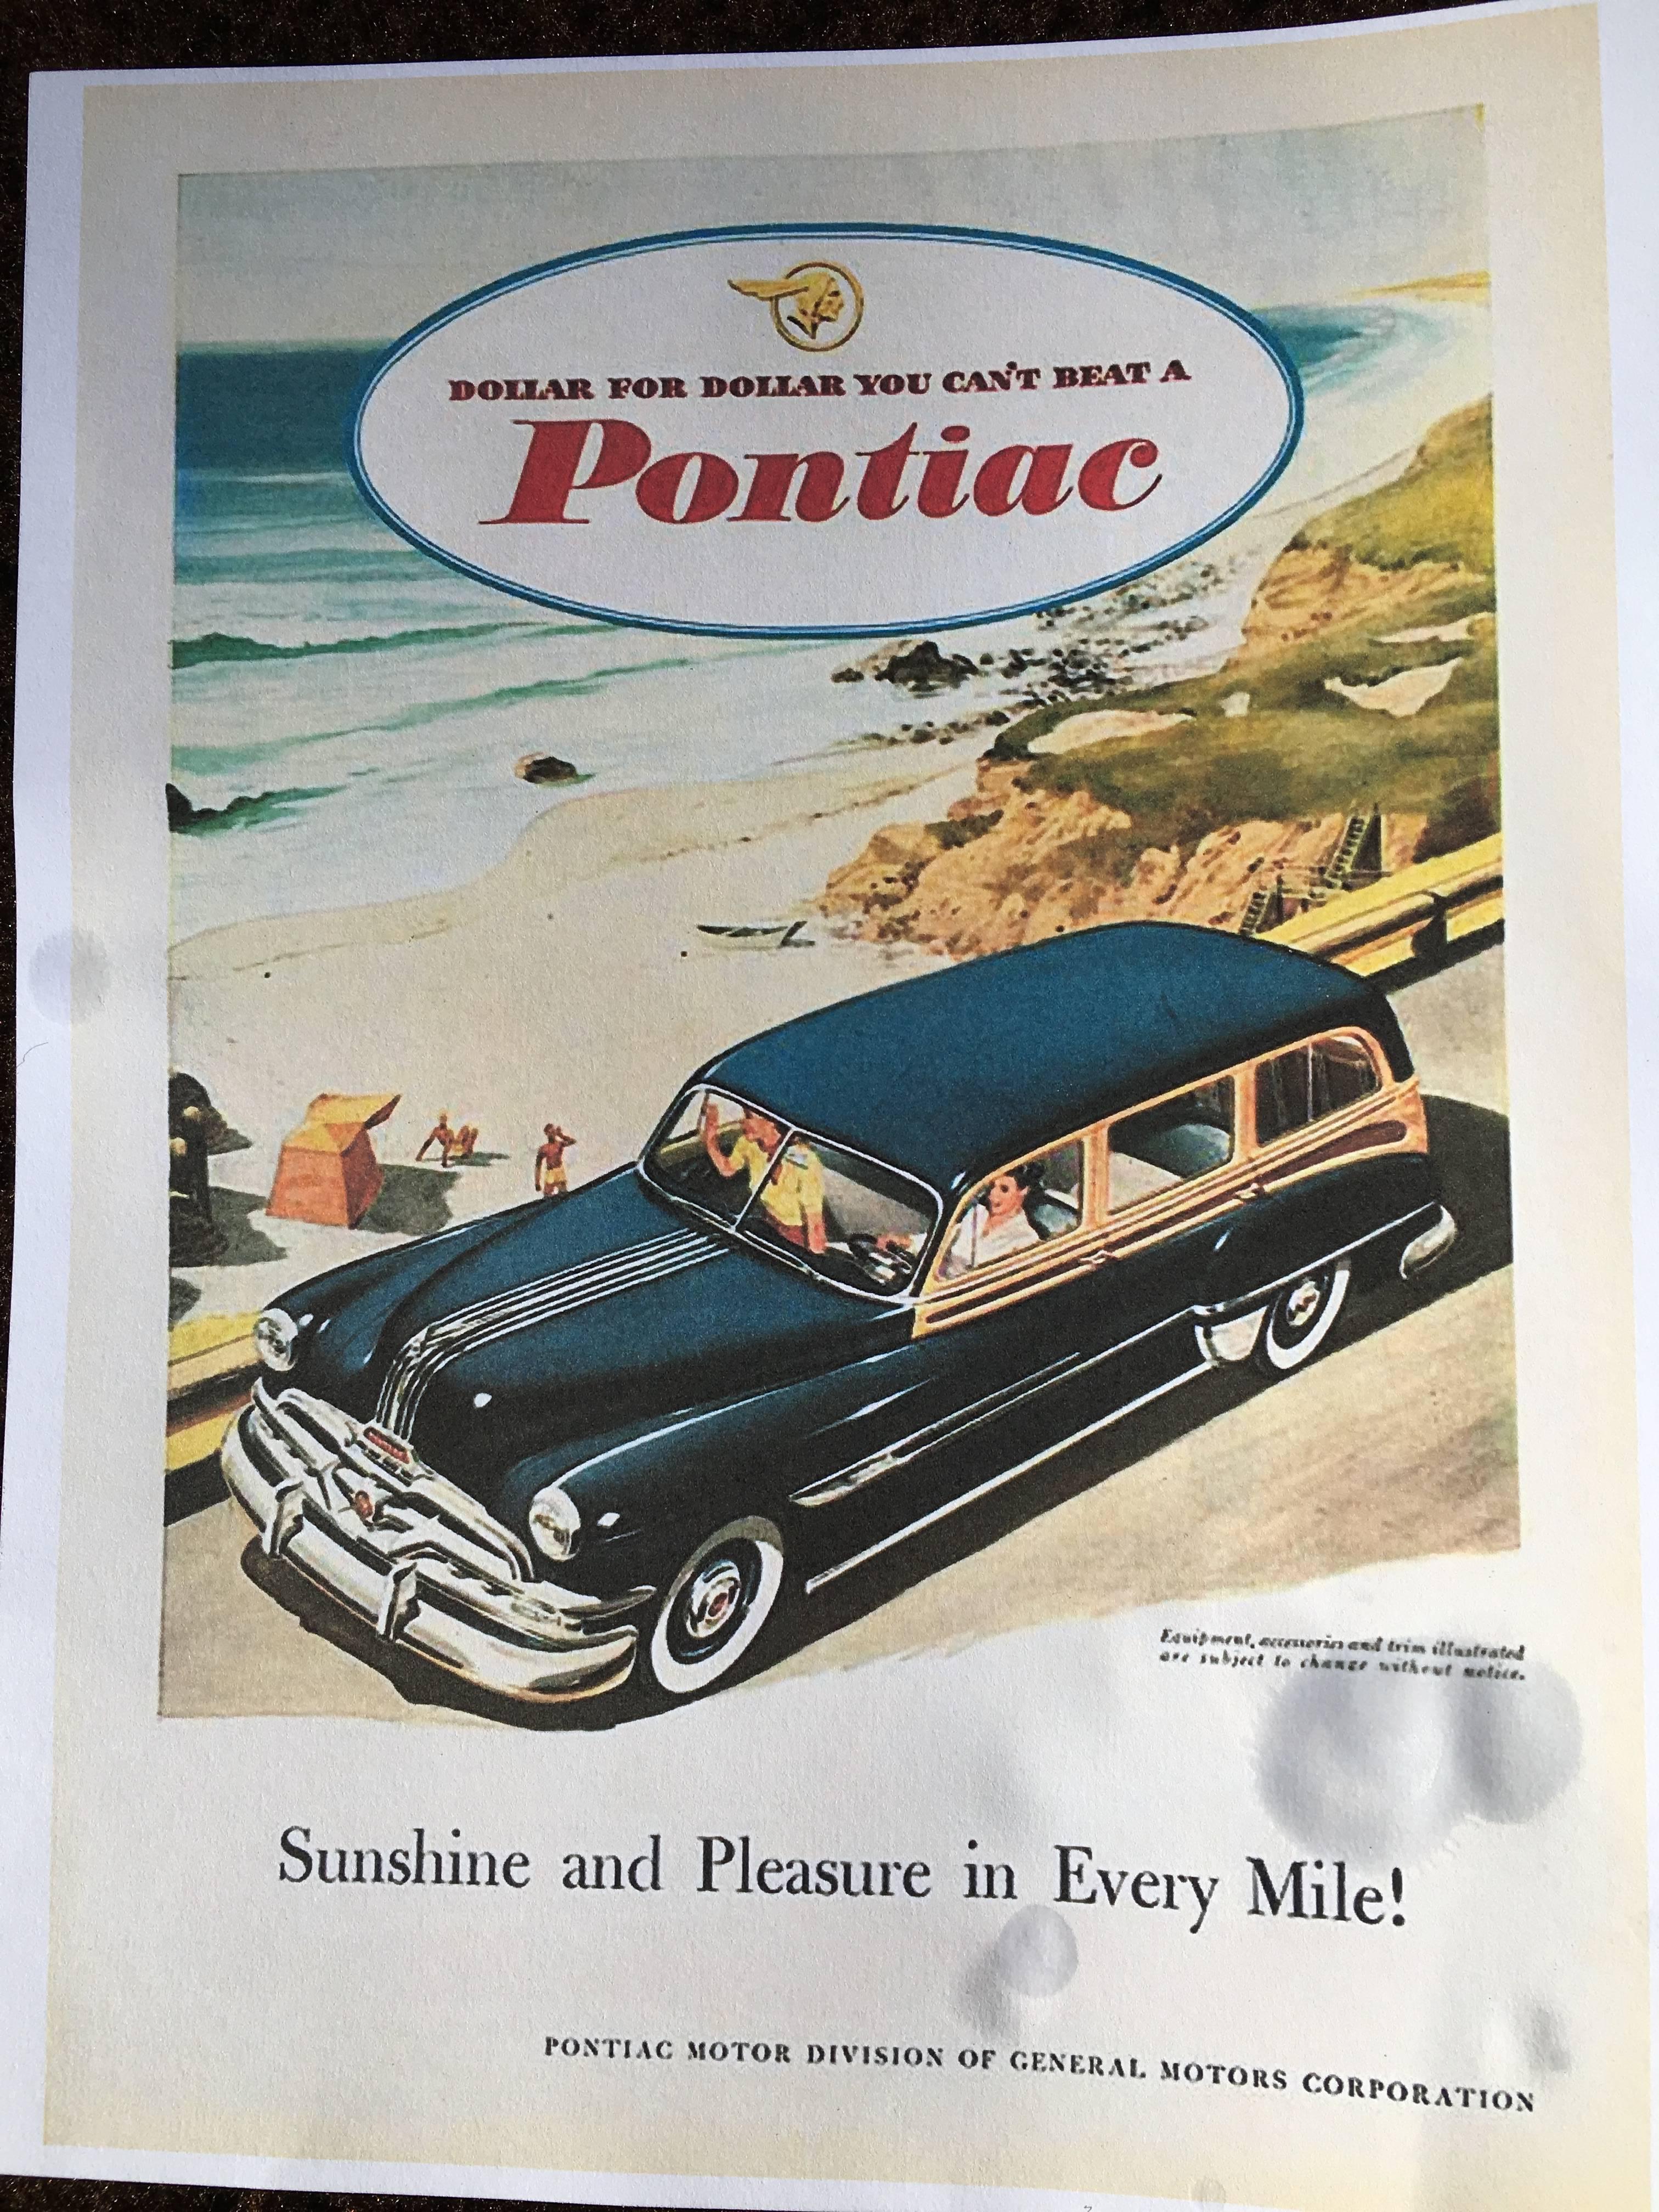 Steel Classic Pontiac Chieftain Deluxe Wagon, 1952